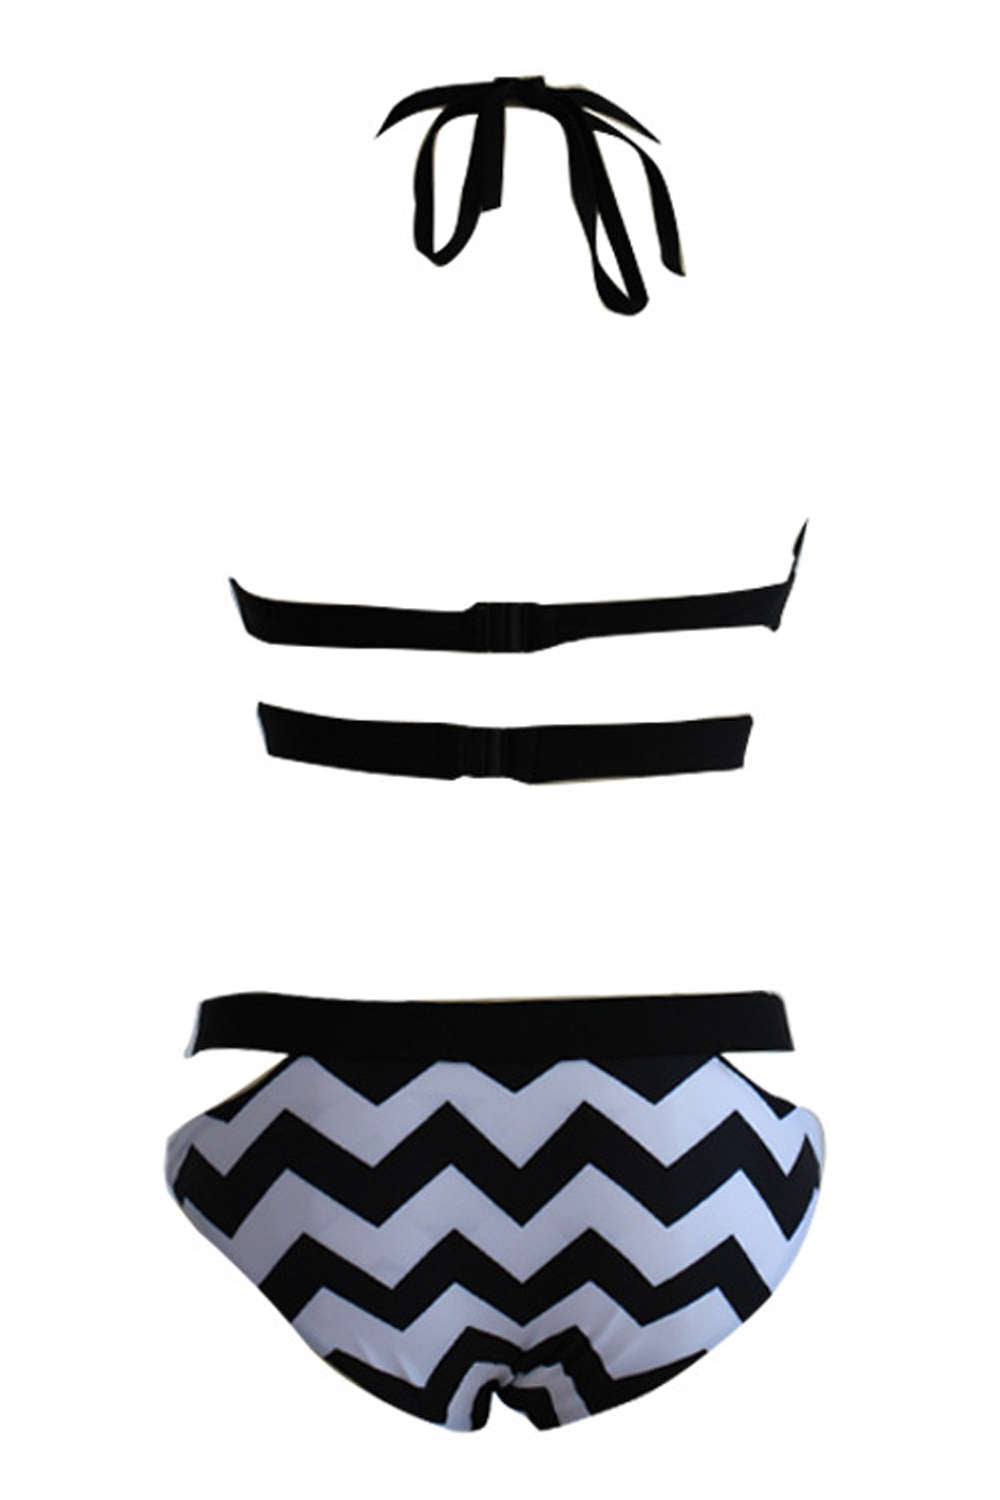 Iyasson Wave Printing Halter Bikini Top and Peek-a-boo Bikini Bottom